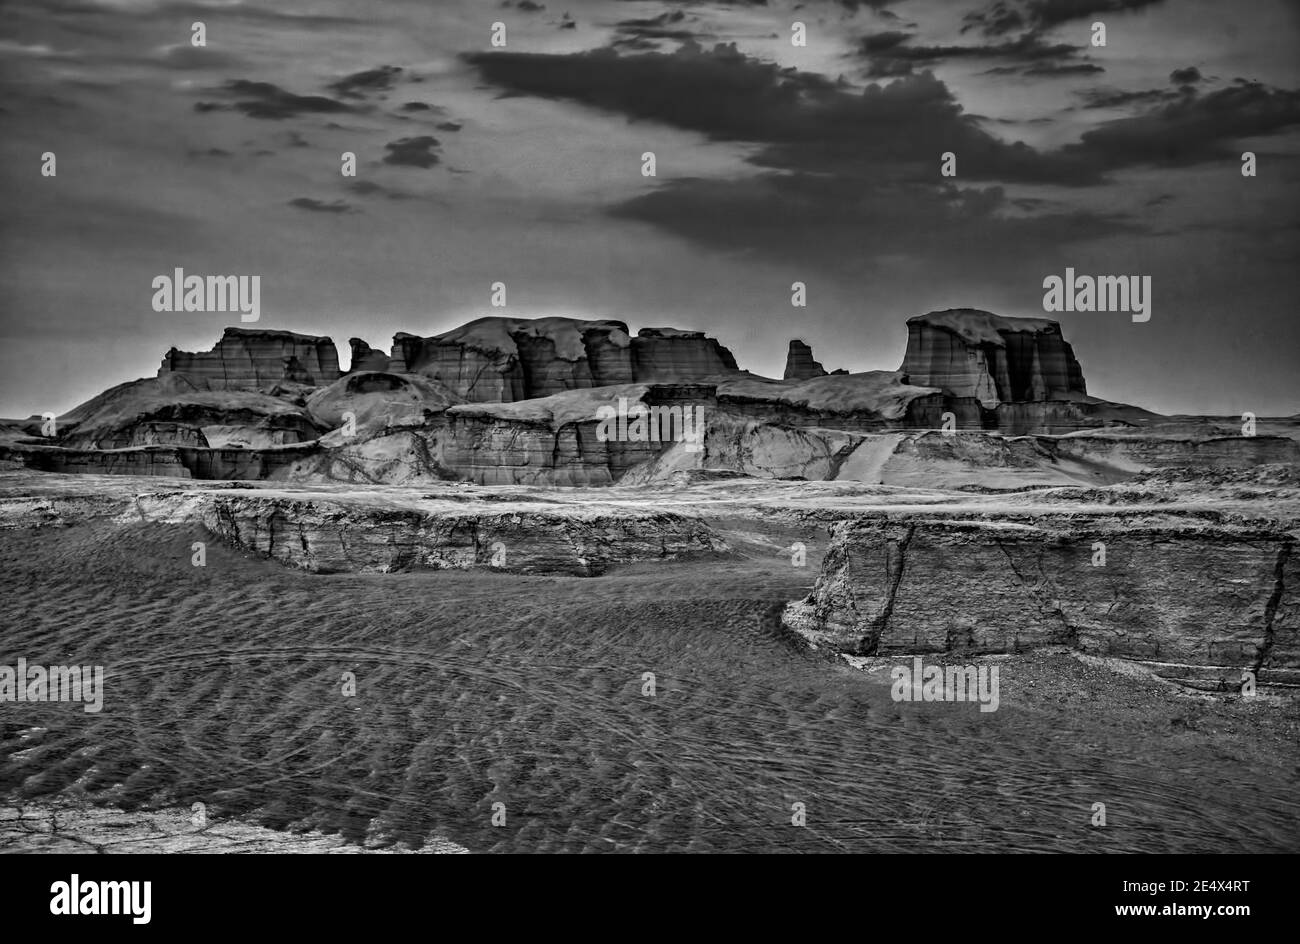 Dasht e lut desert Black and White Stock Photos & Images - Alamy